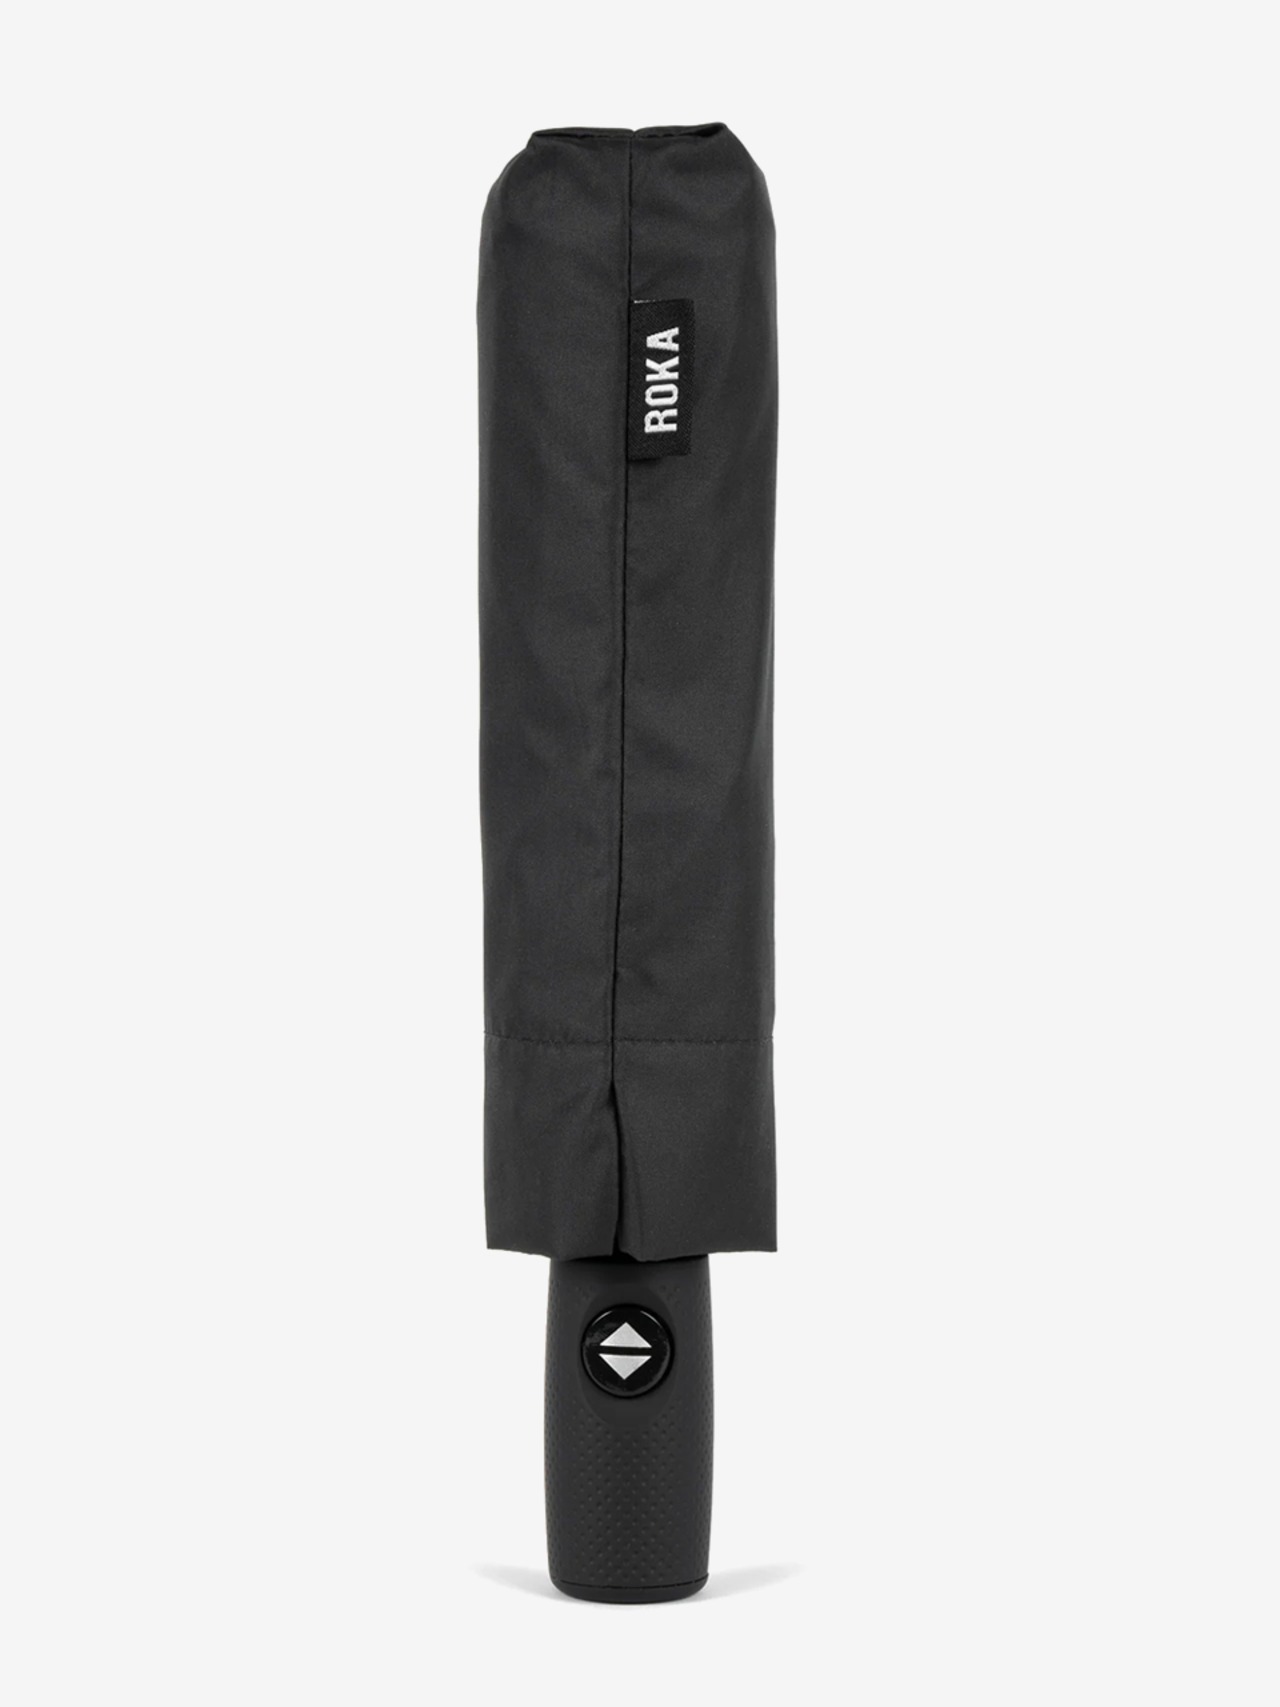 ROKA「BAYSWATER UMBRELLA BAG - BLACK（リュックと折りたたみ傘のセット）」ー 送料無料